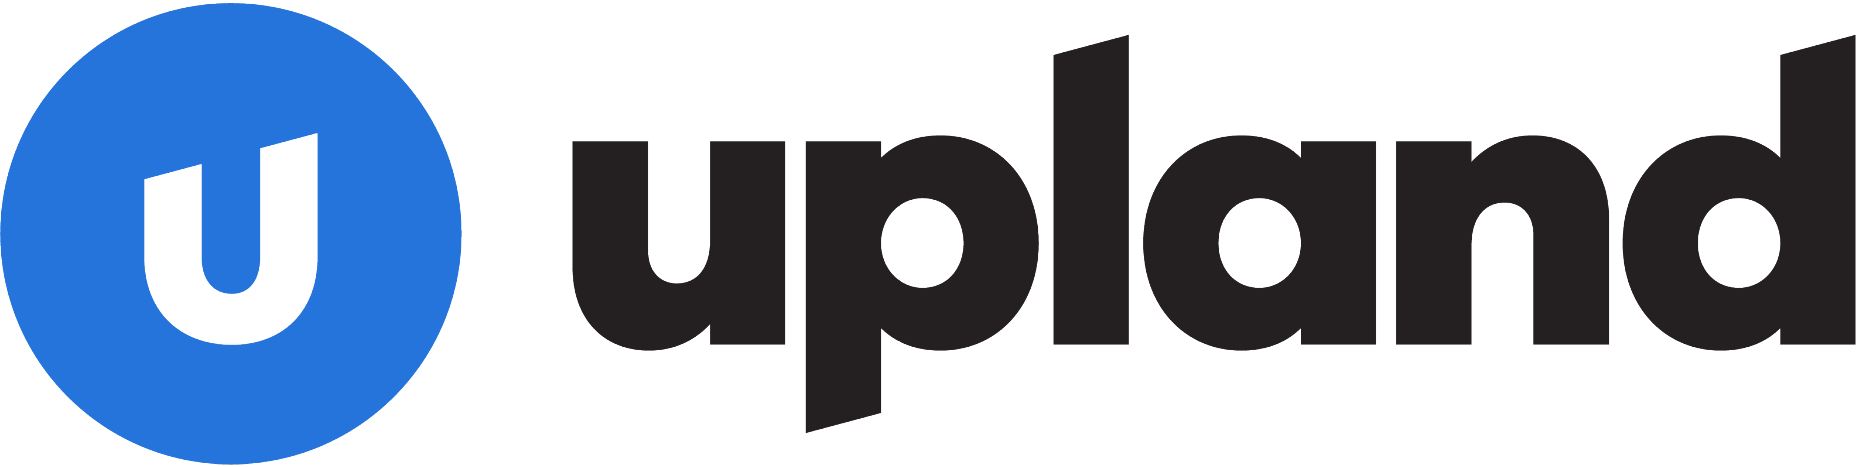 Upland Logo - JPEG.jpg